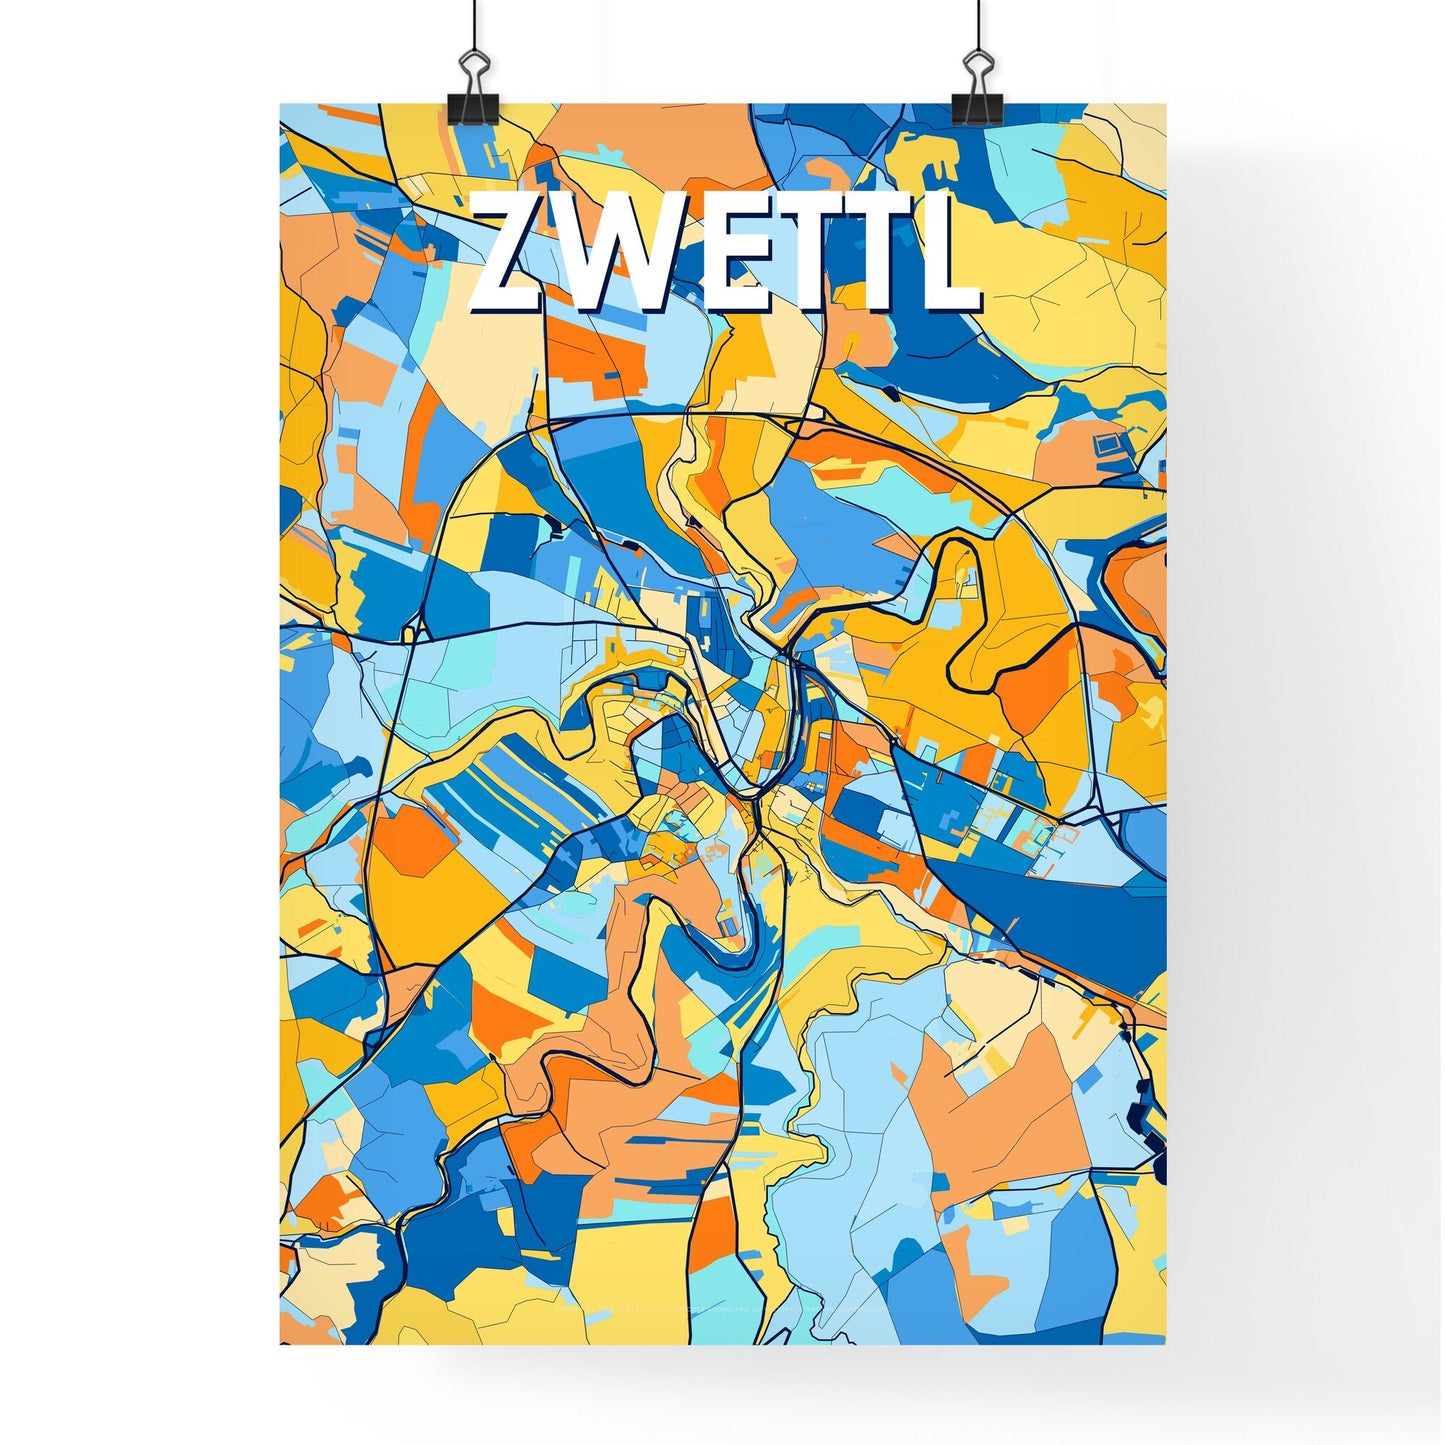 ZWETTL AUSTRIA Vibrant Colorful Art Map Poster Blue Orange